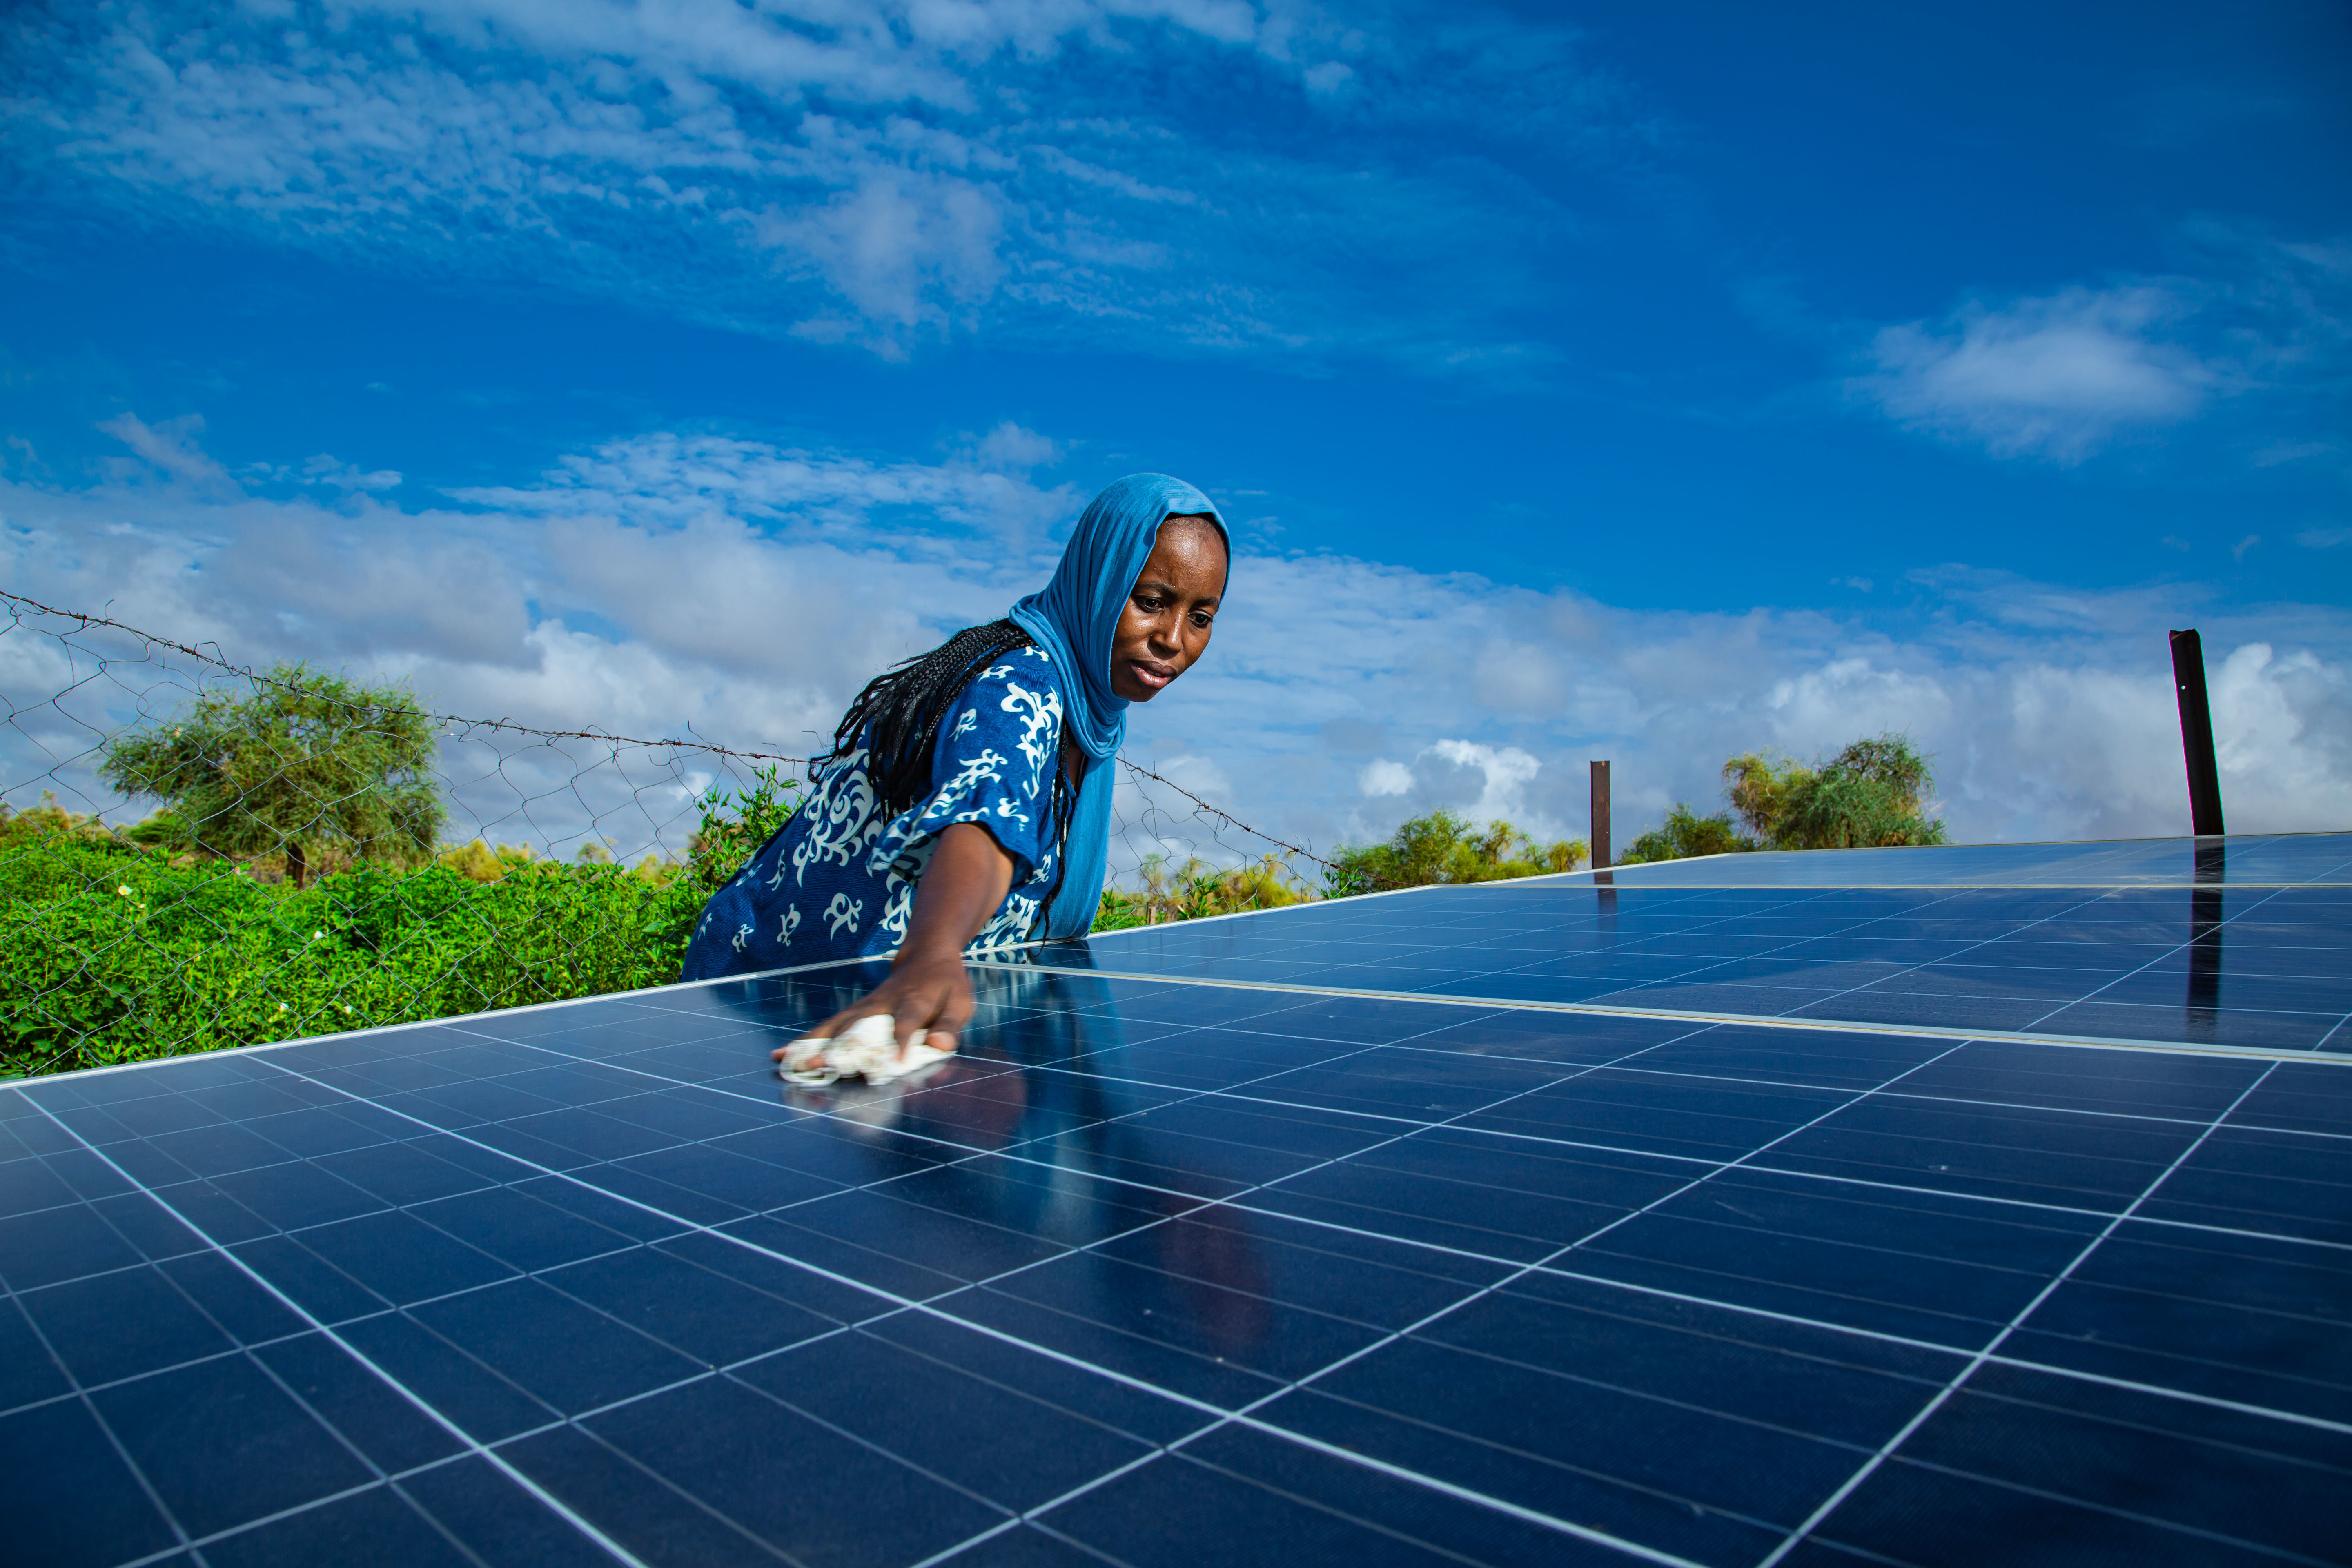 100% RENEWABLE ENERGY AND POVERTY ERADICATION IN TANZANIA